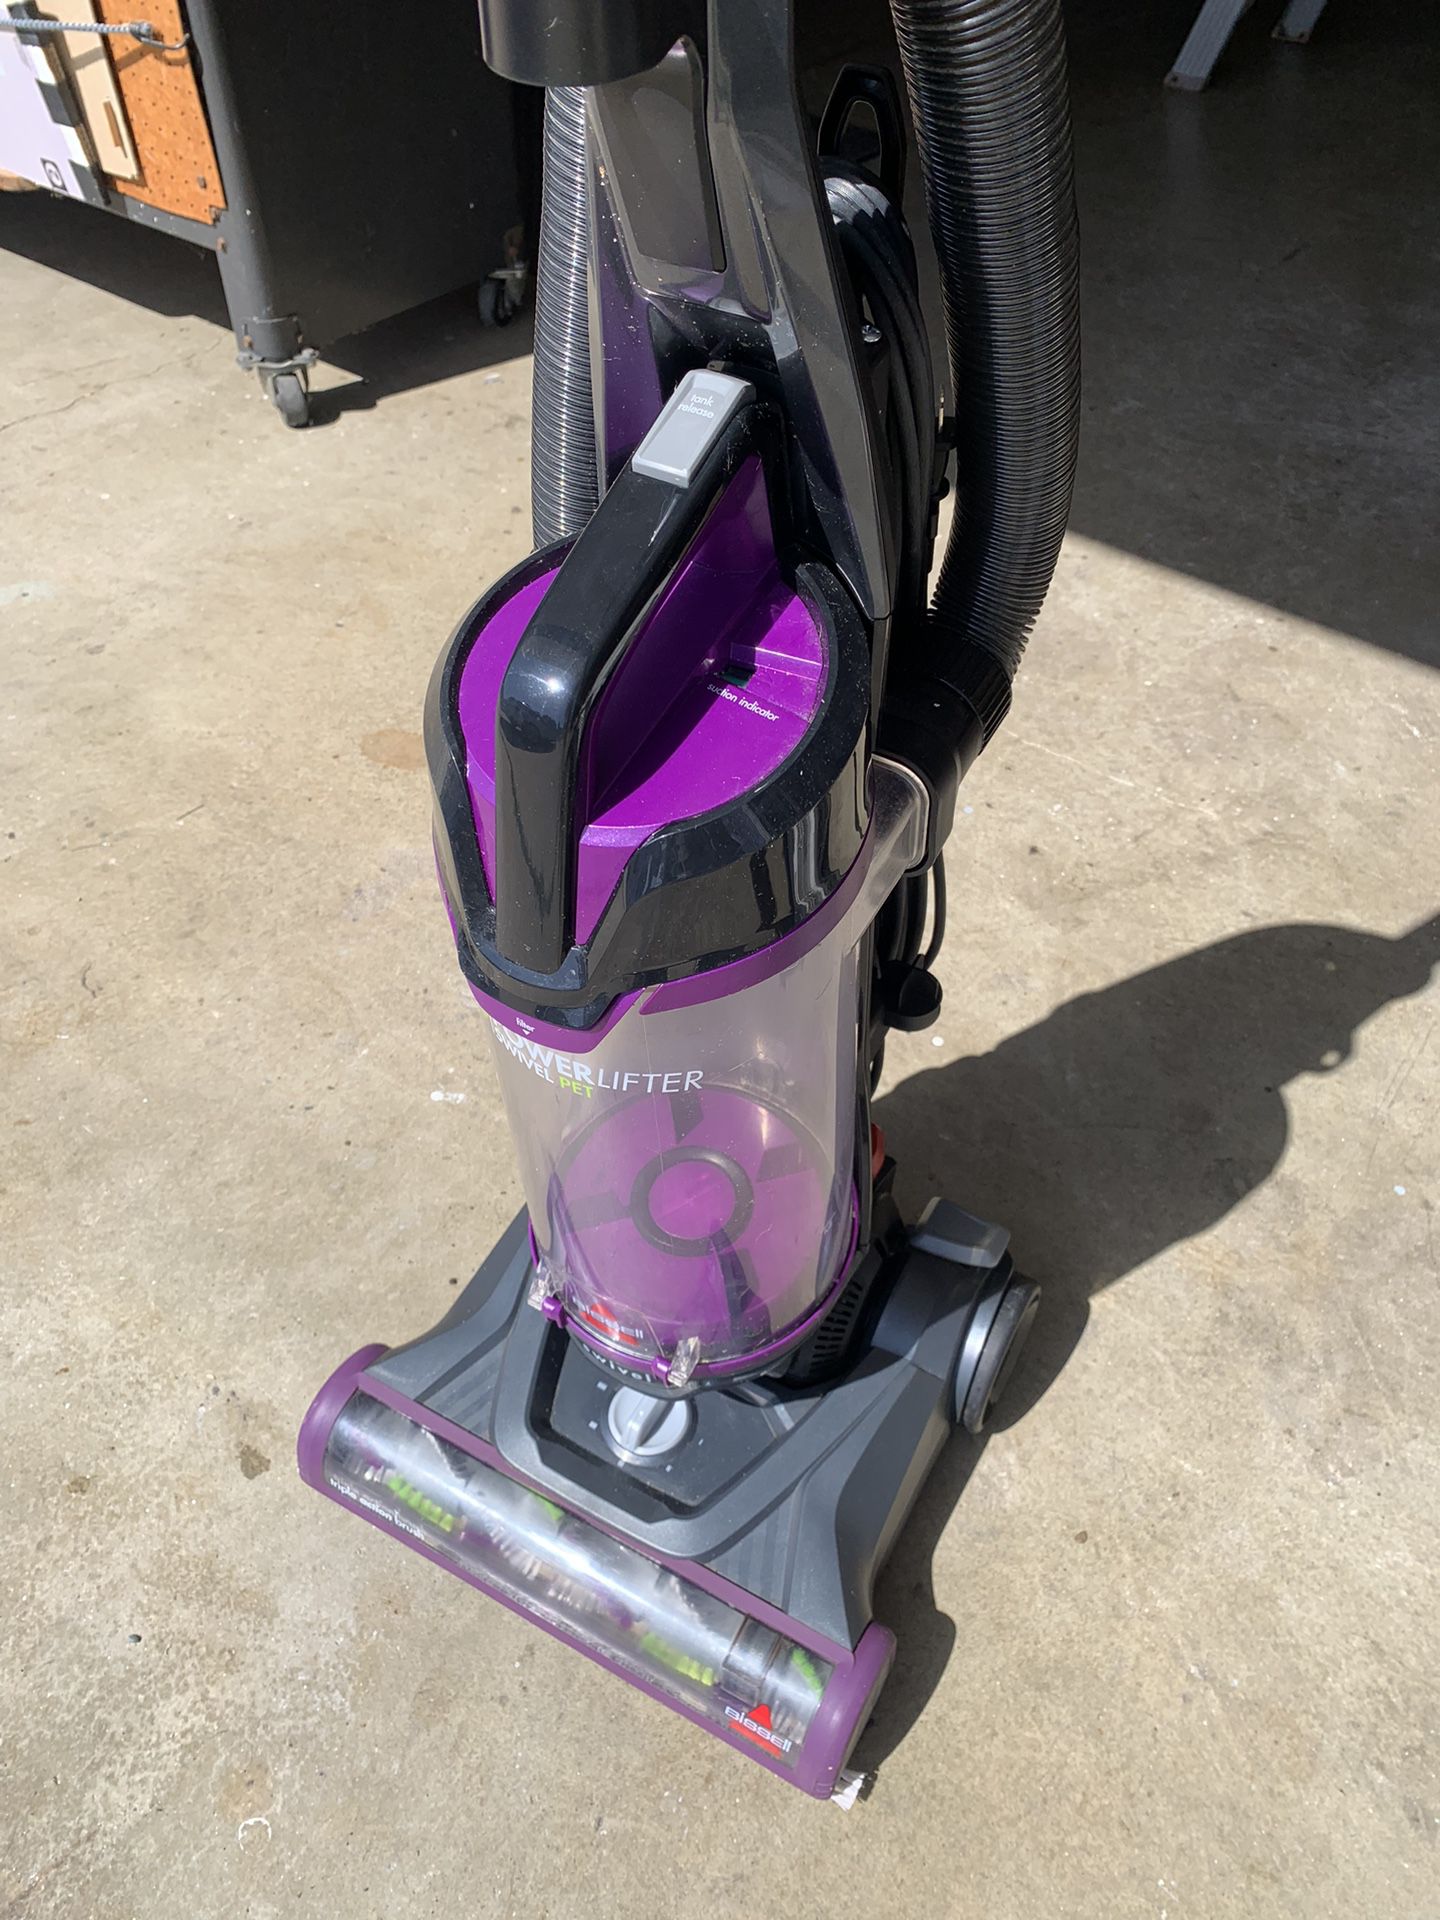 Bissell Powerlifter Swivel Pet Vacuum